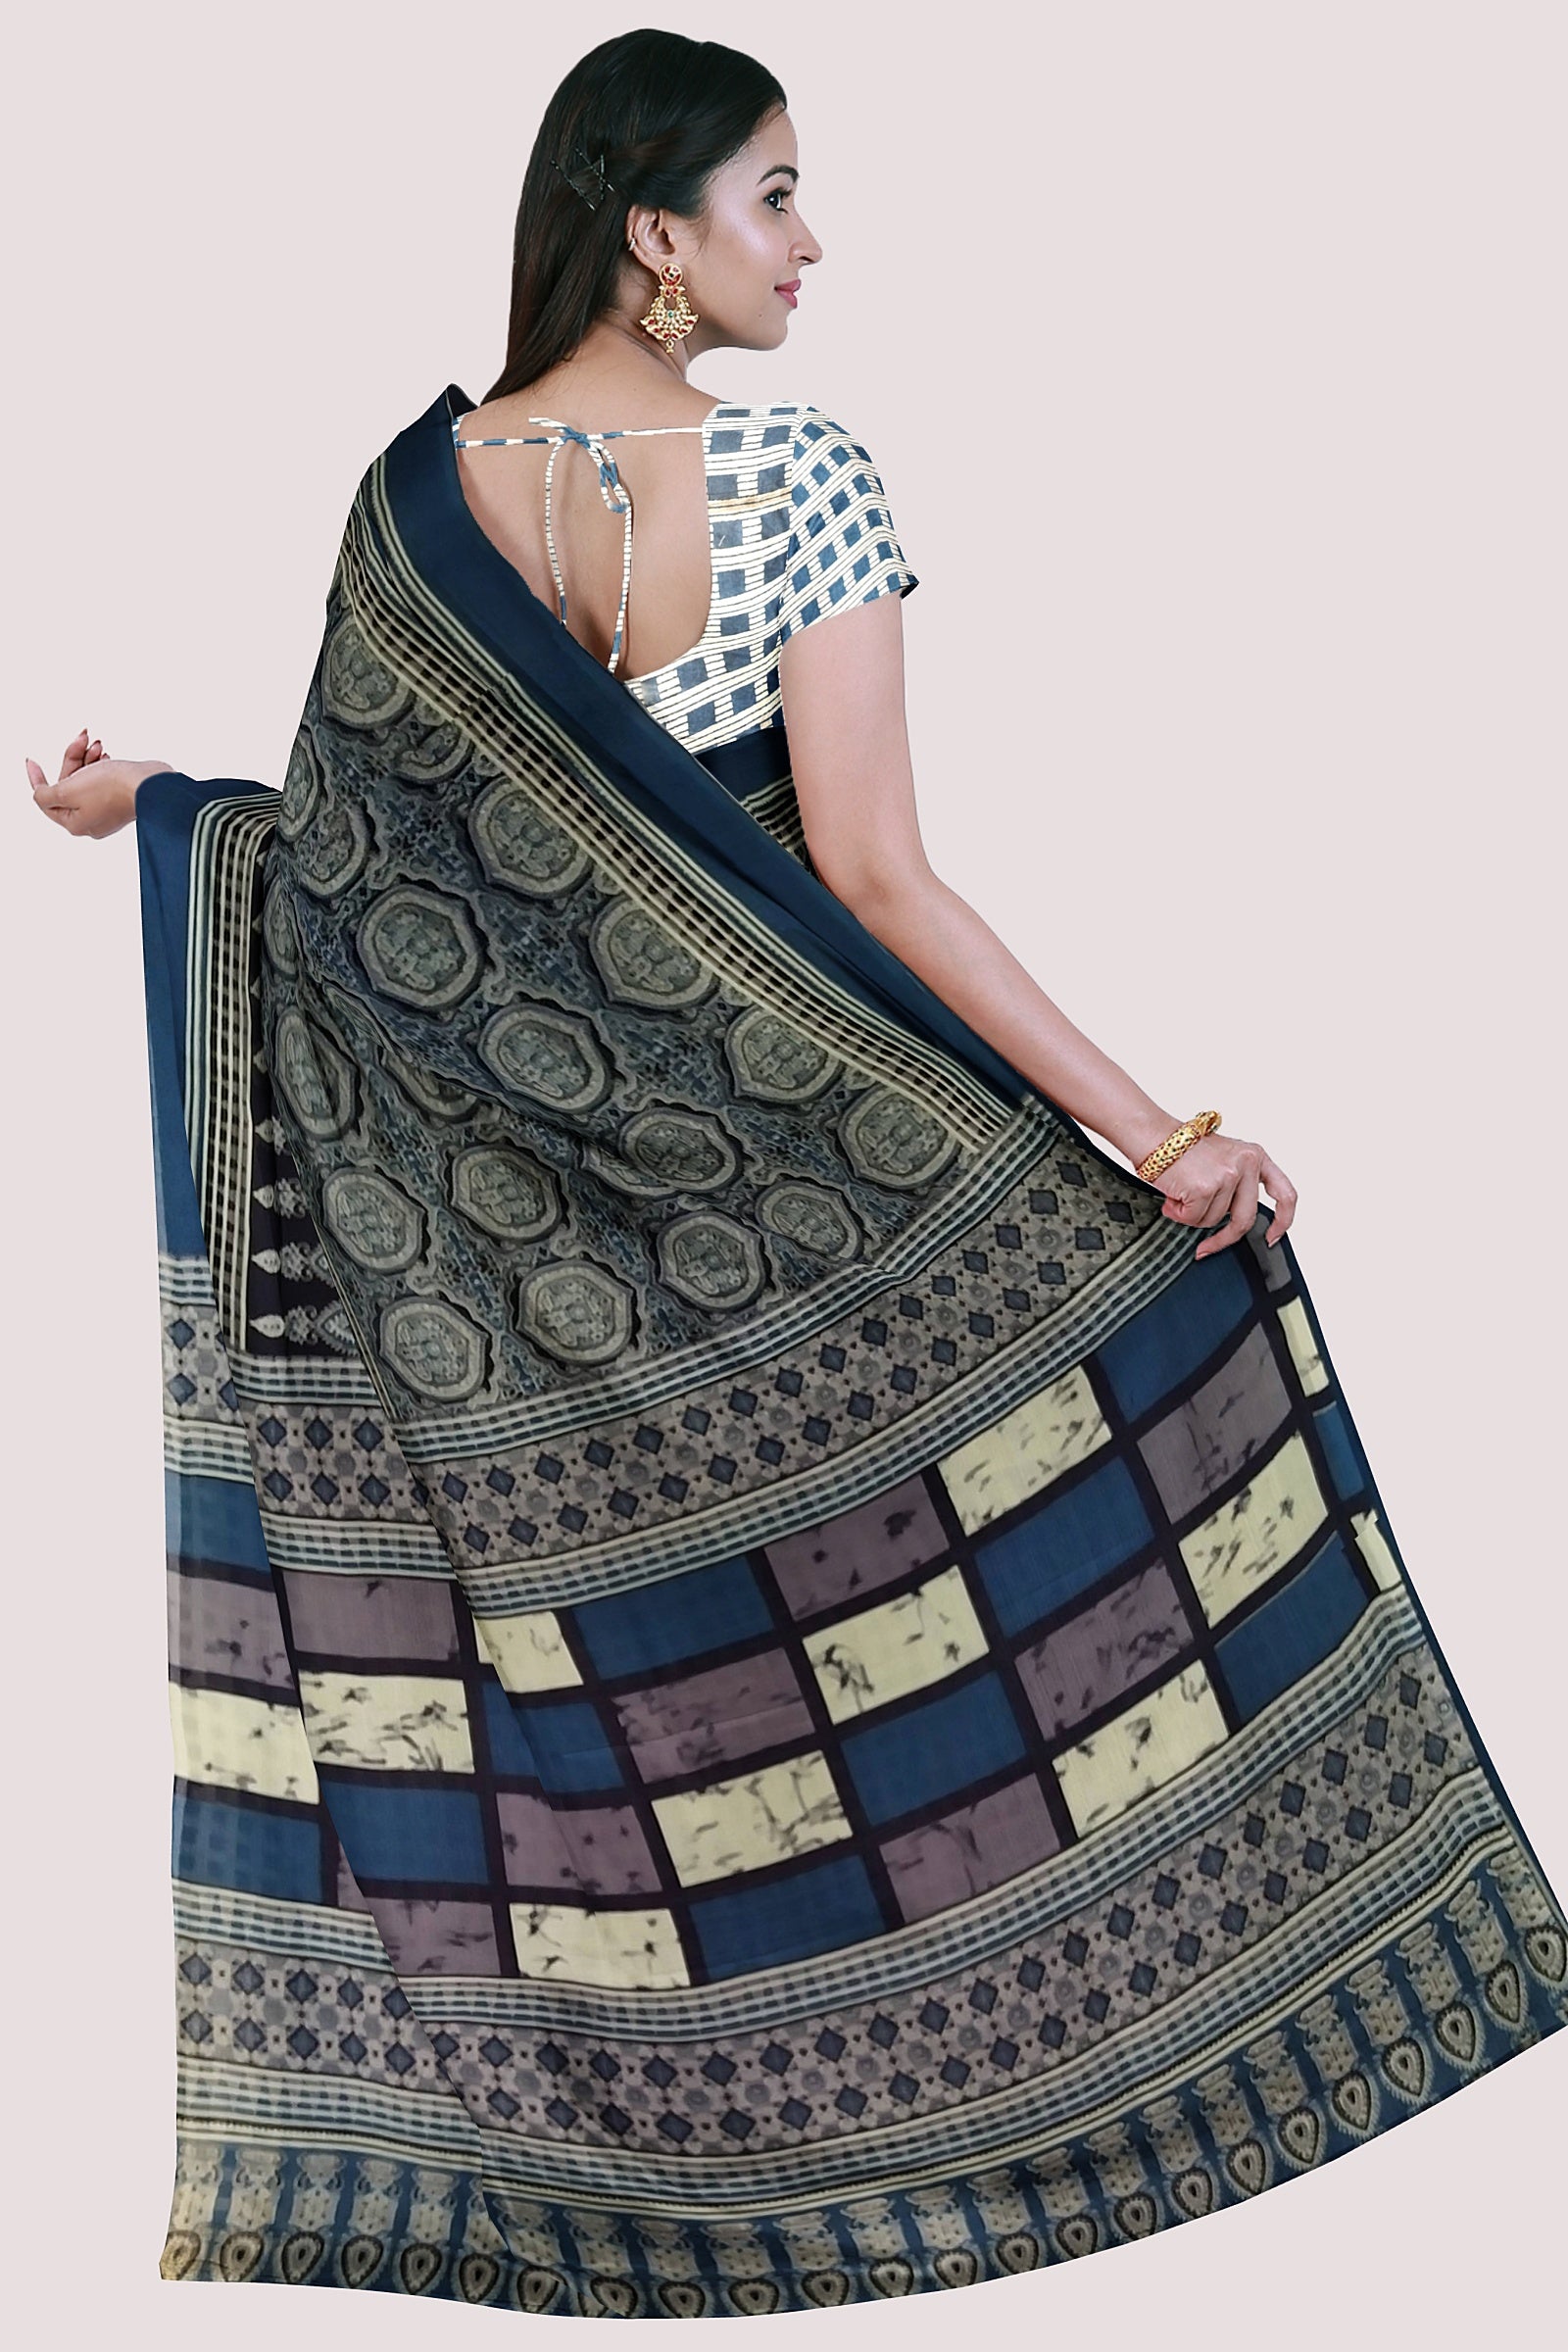 Contour Block Printed Mul Cotton Saree at Rs 1590.00, कॉटन मुलमुल साड़ी -  Vaagmi World Fashion & Lifestyle, Delhi